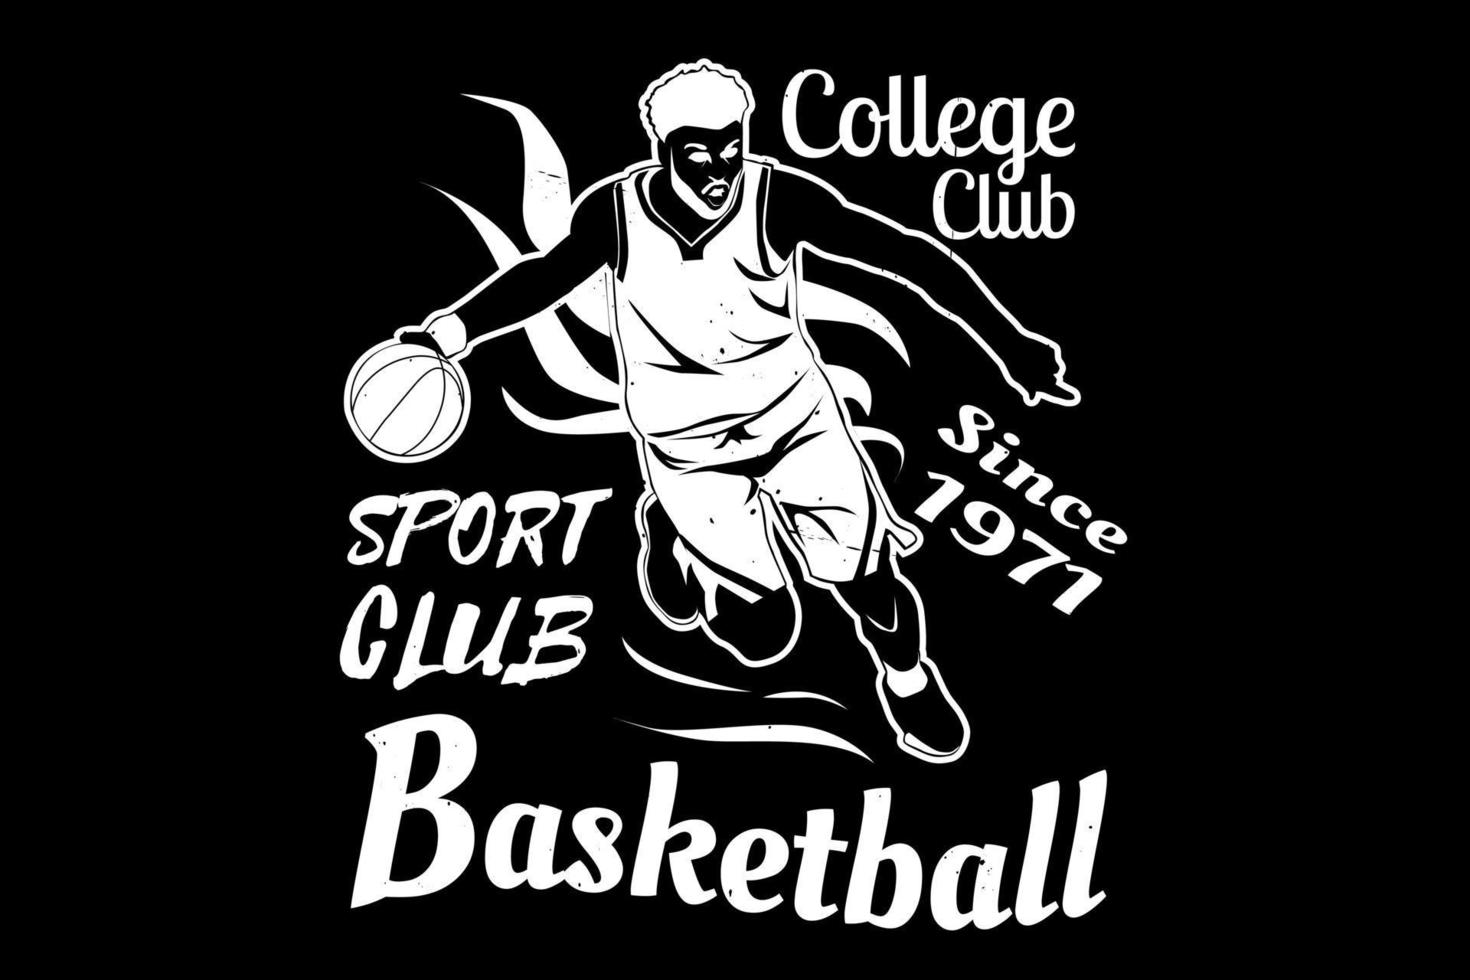 Sport club basketball silhouette design vector